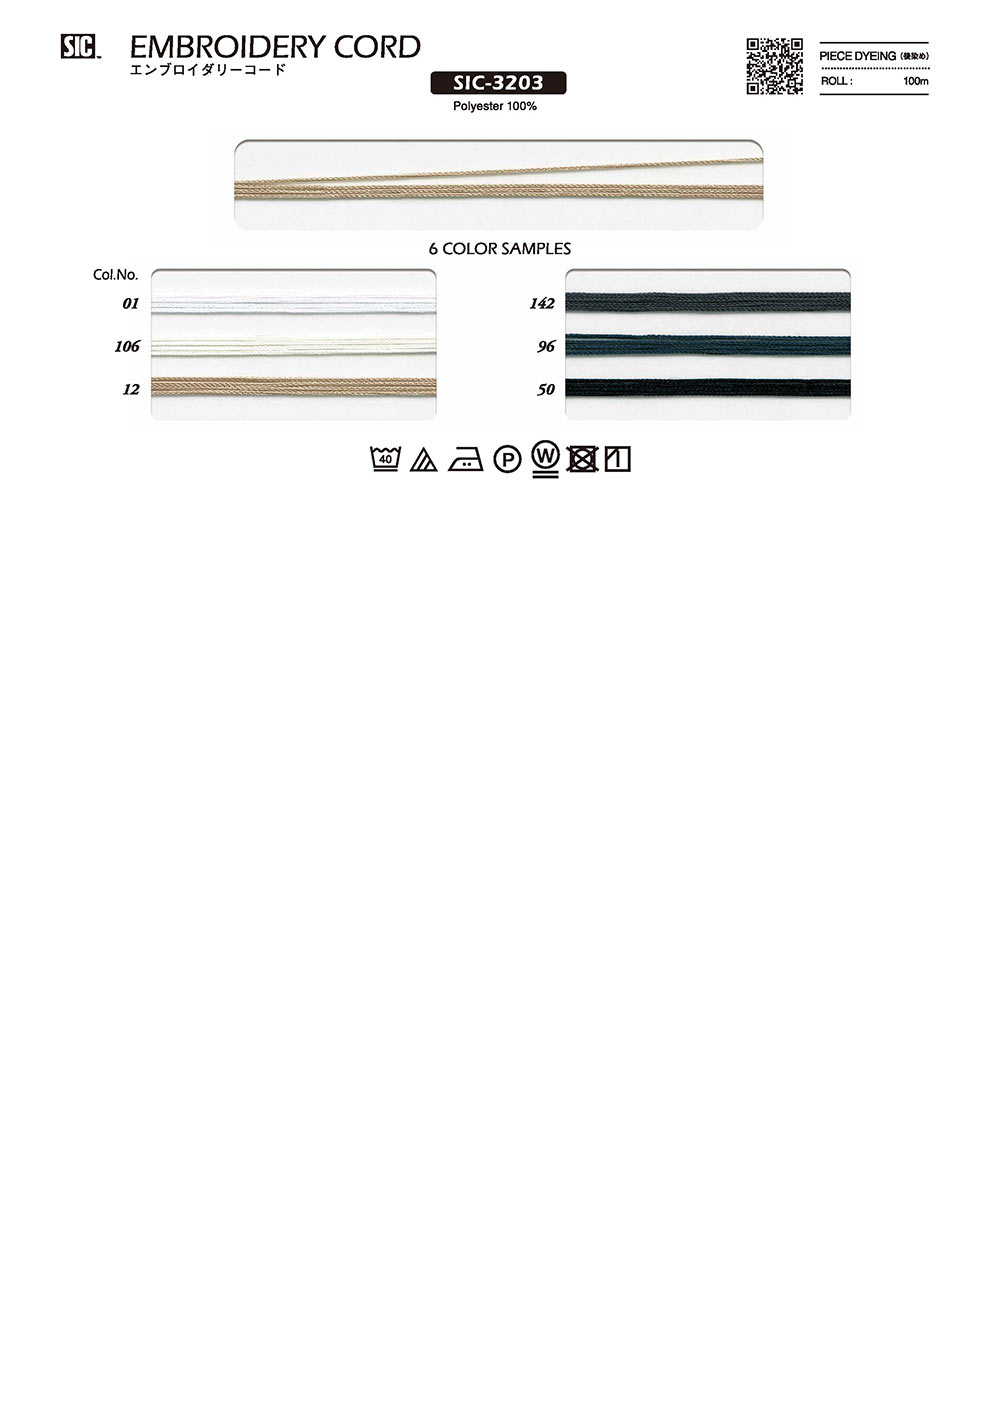 SIC-3203 Embroidery Cord[Ribbon Tape Cord] SHINDO(SIC)